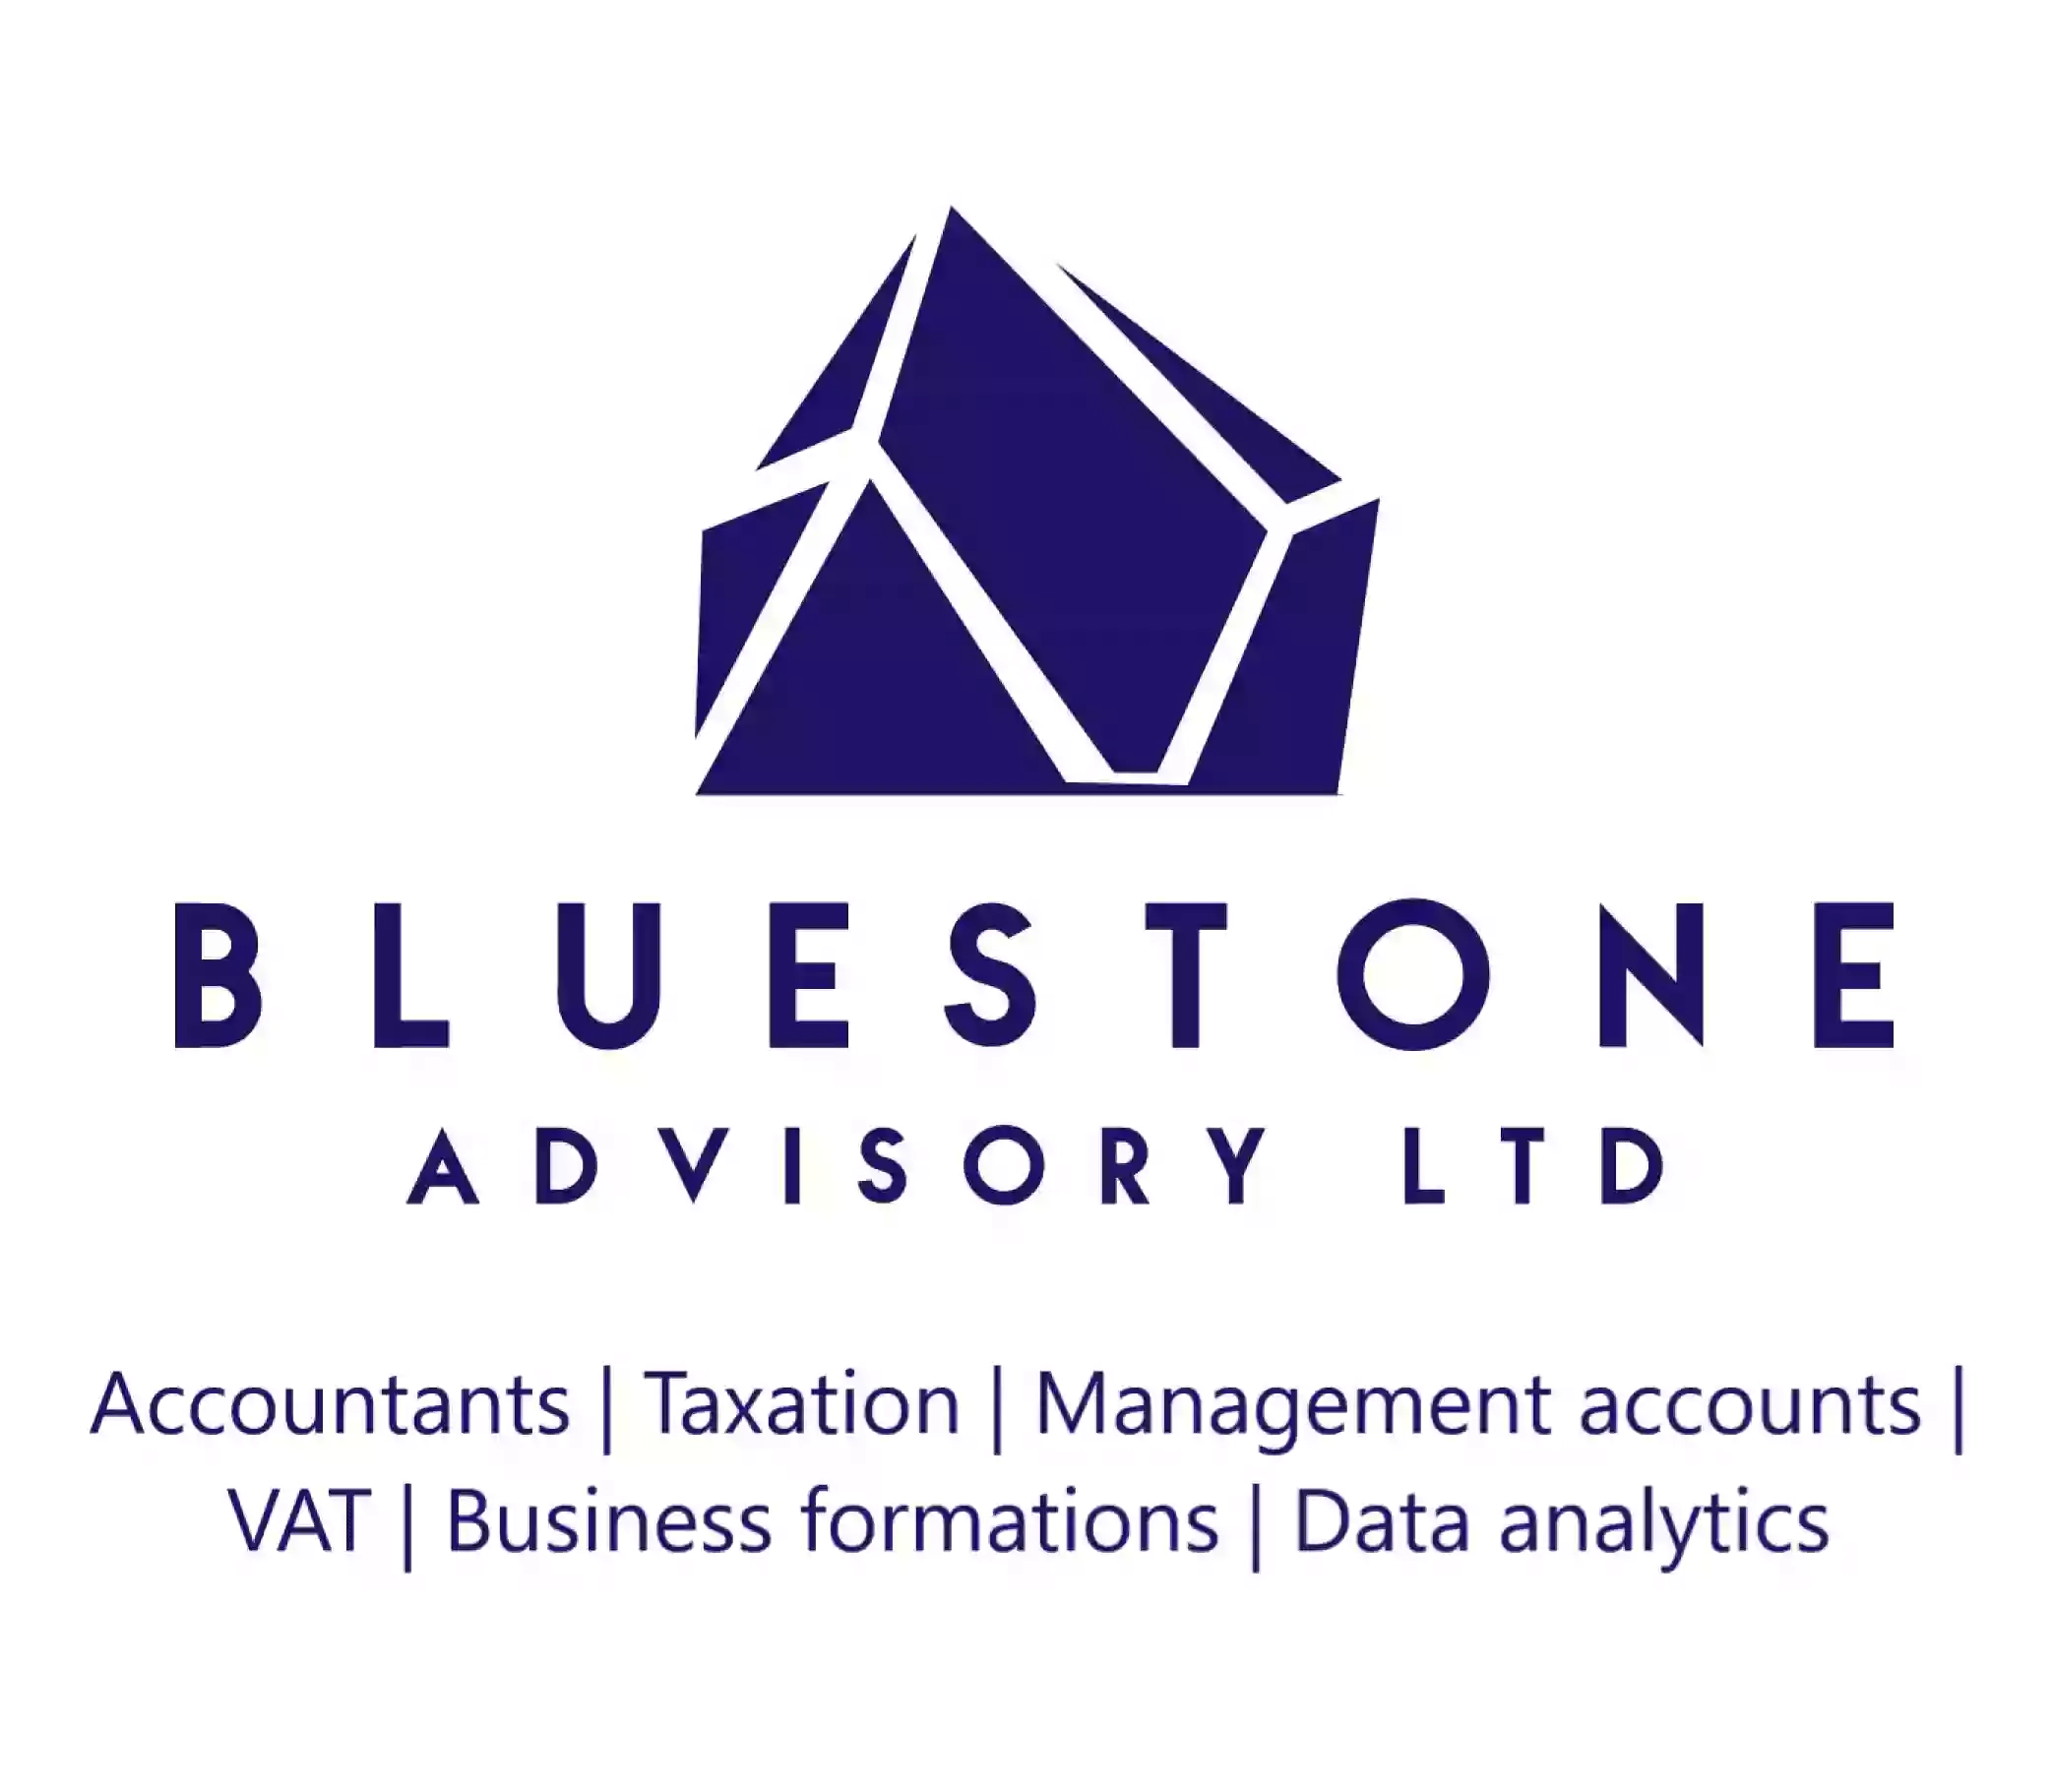 Bluestone Advisory Ltd - Accountants